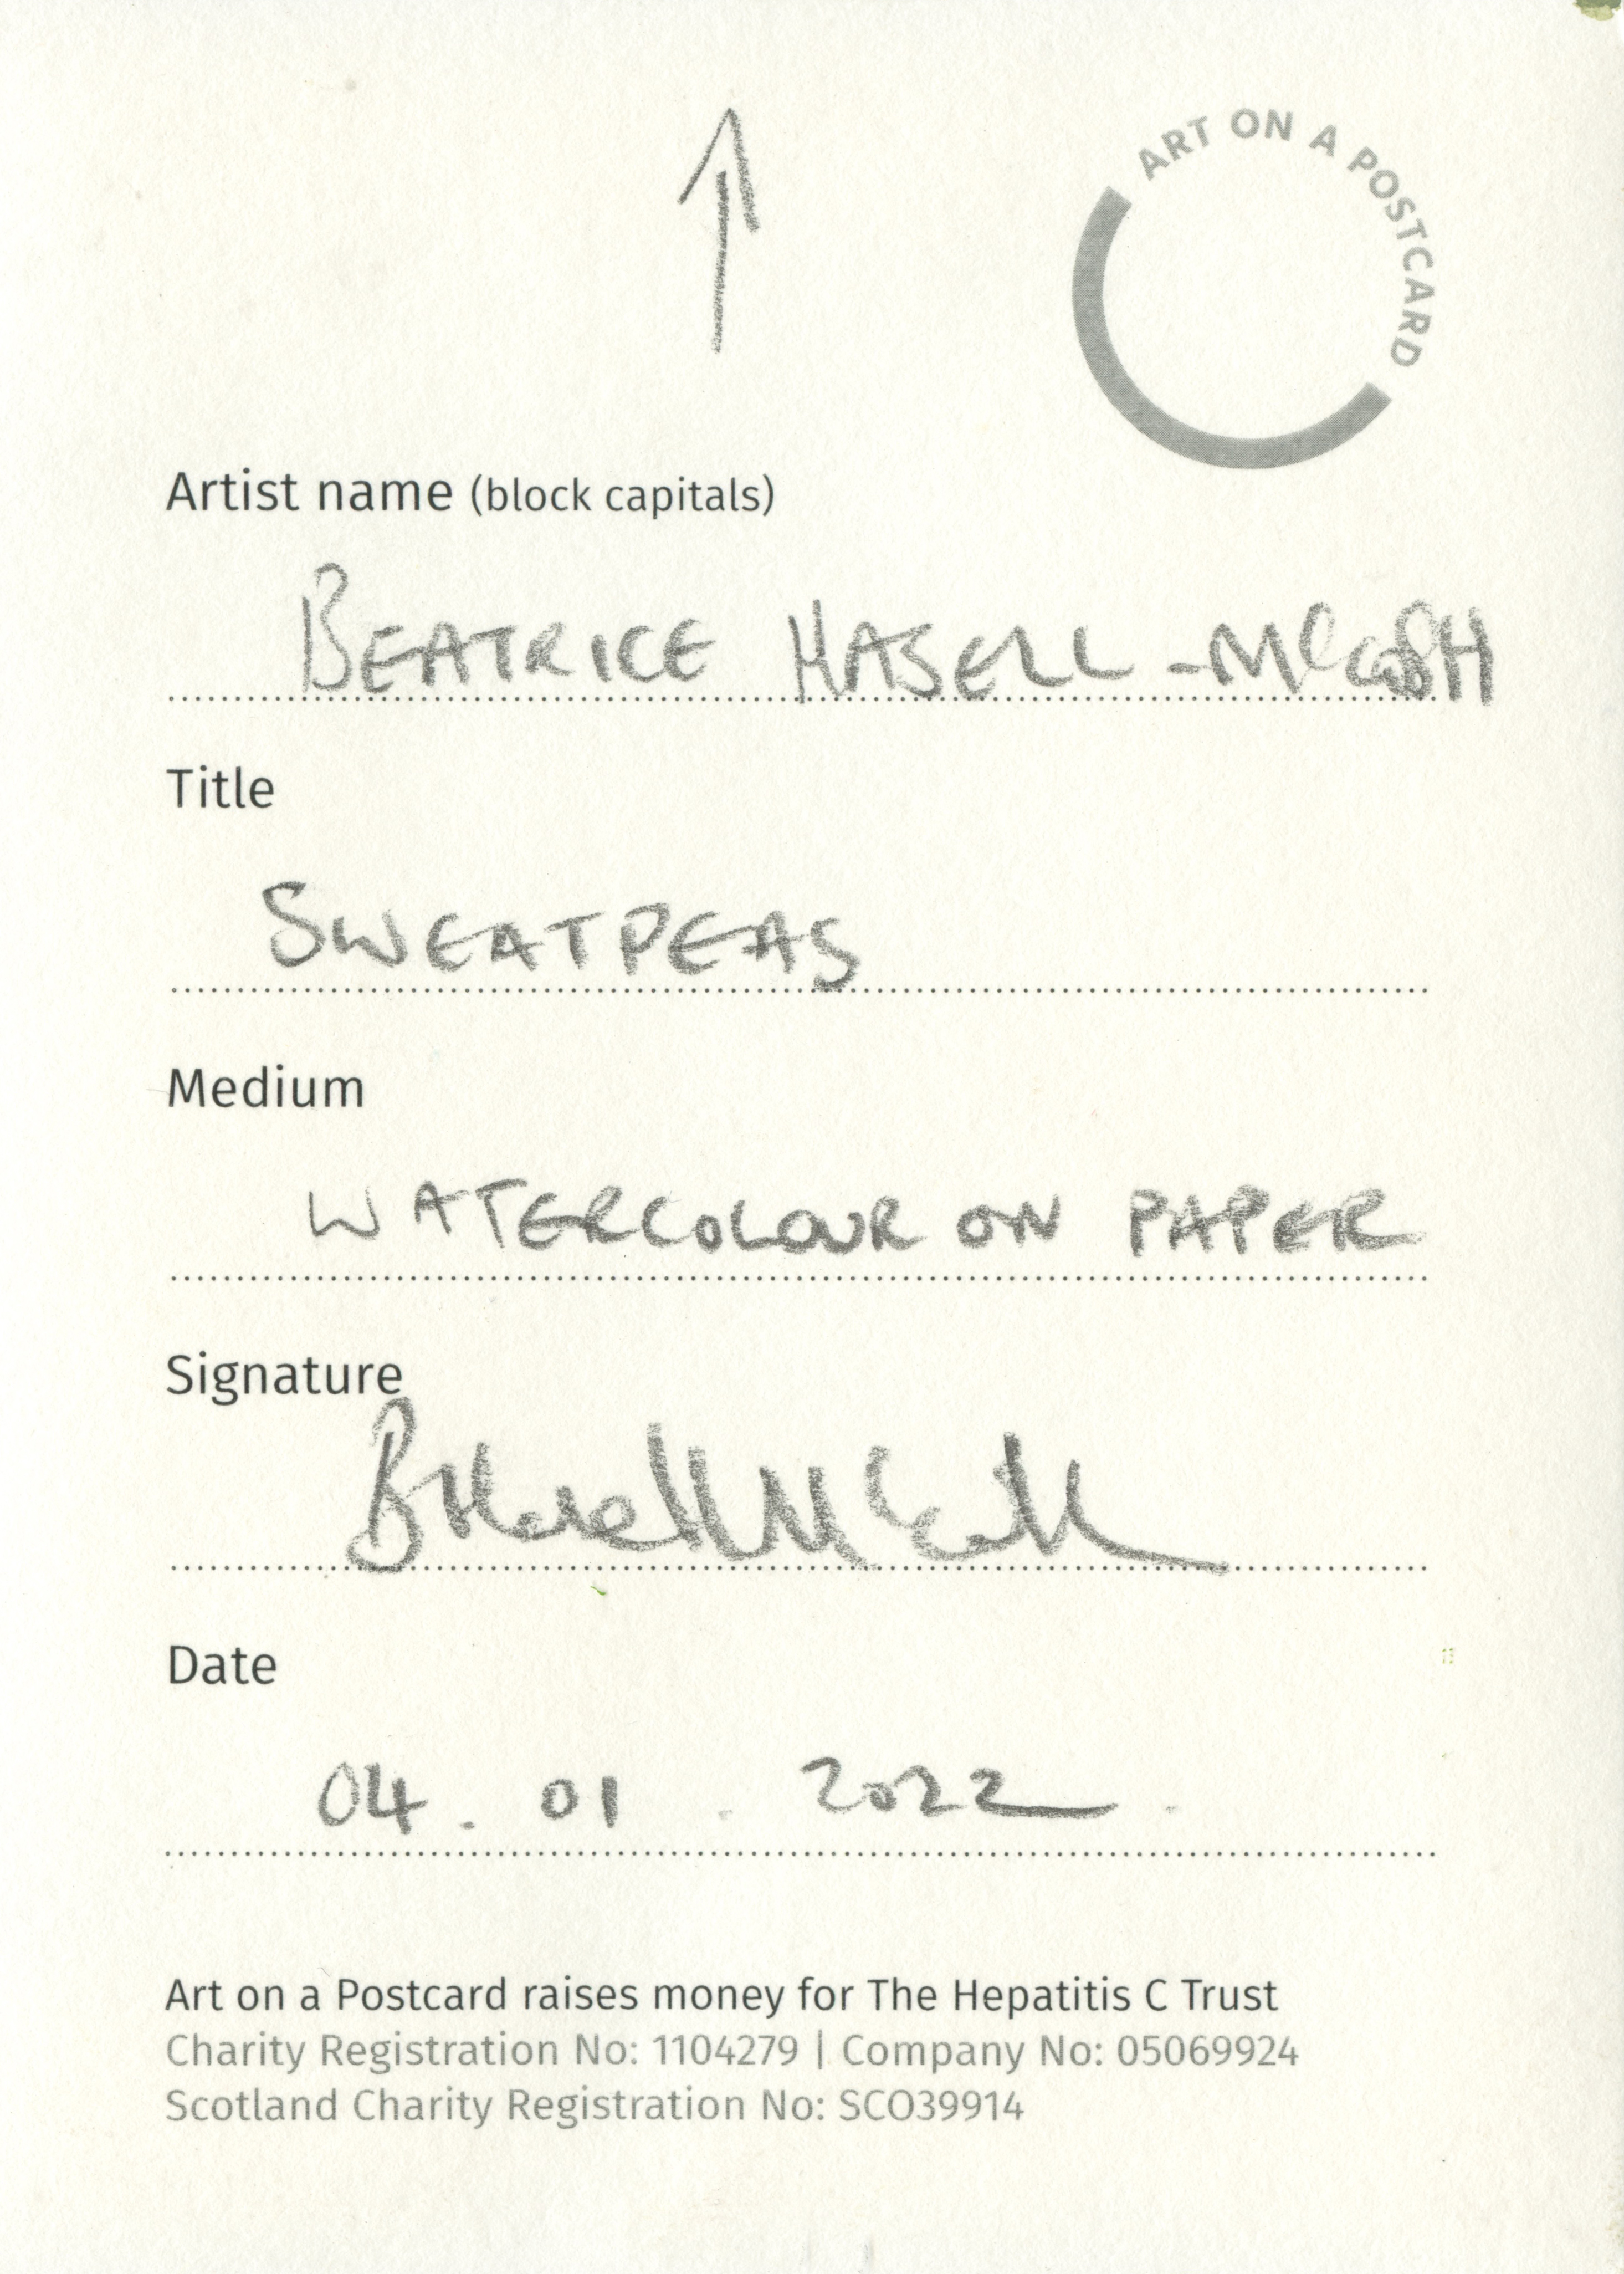 19. Beatrice Hasell-McCosh - Sweetpeas - BACK